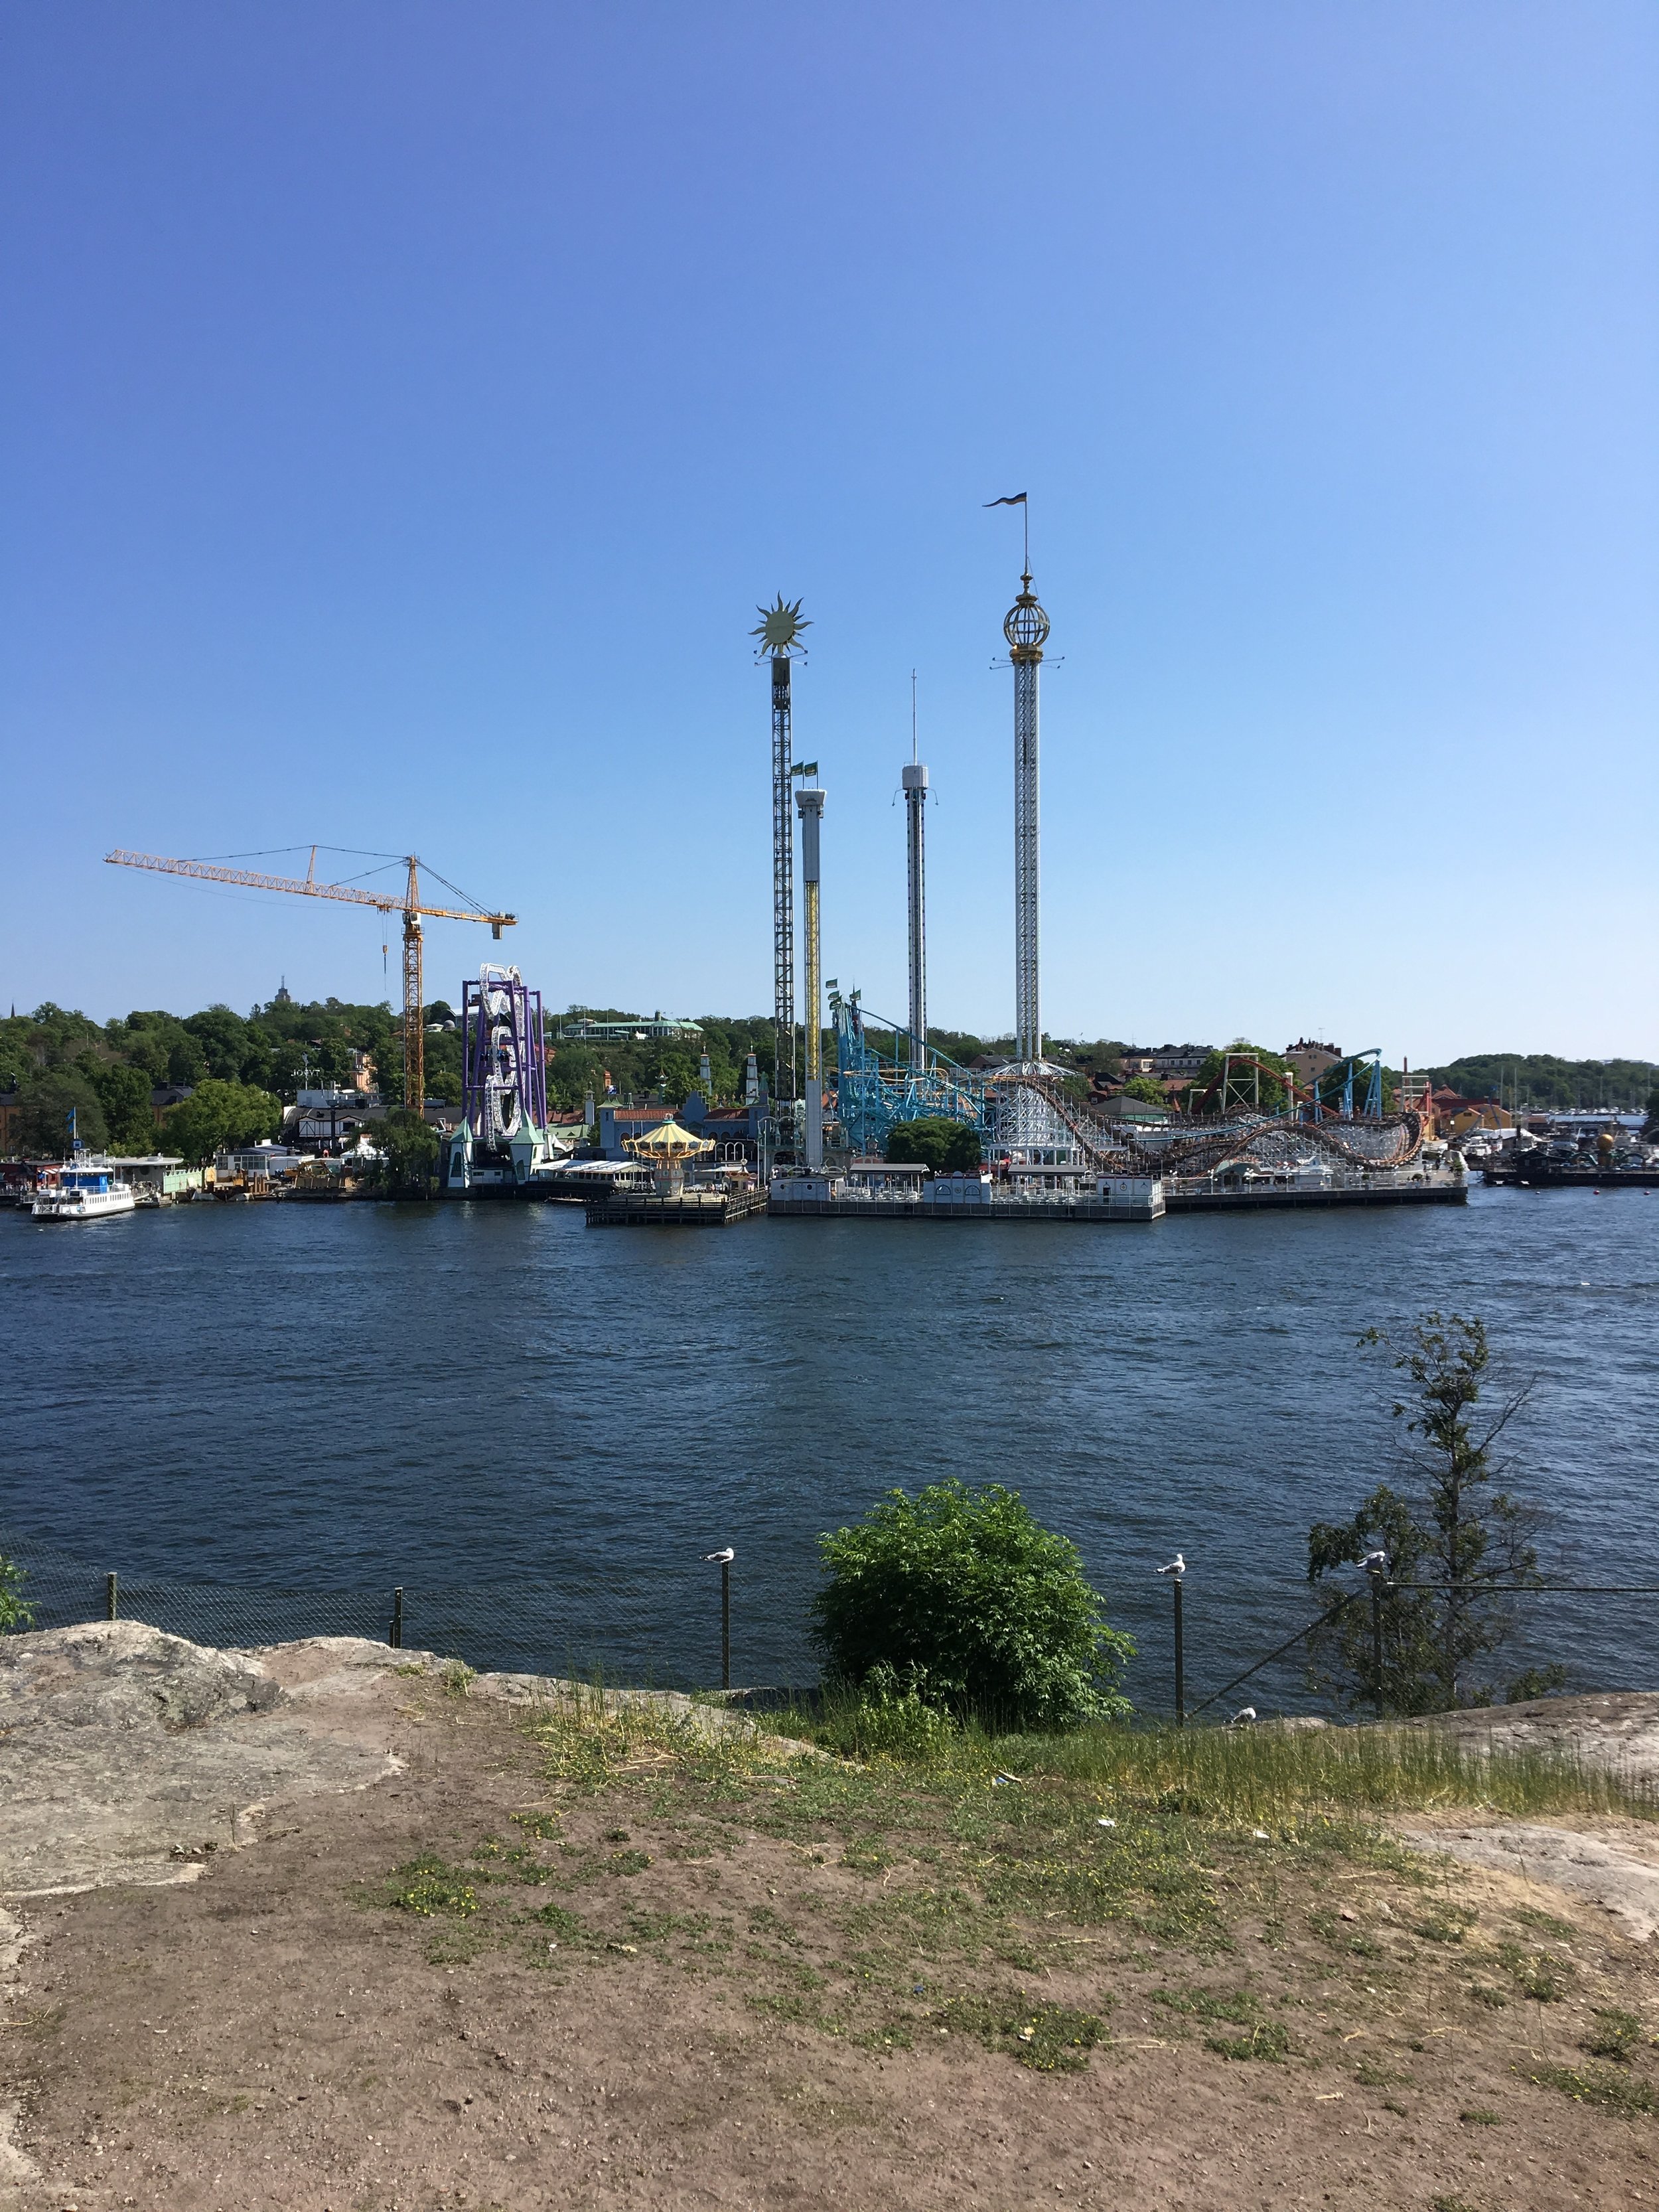 Gronalund, Stockholm's theme park